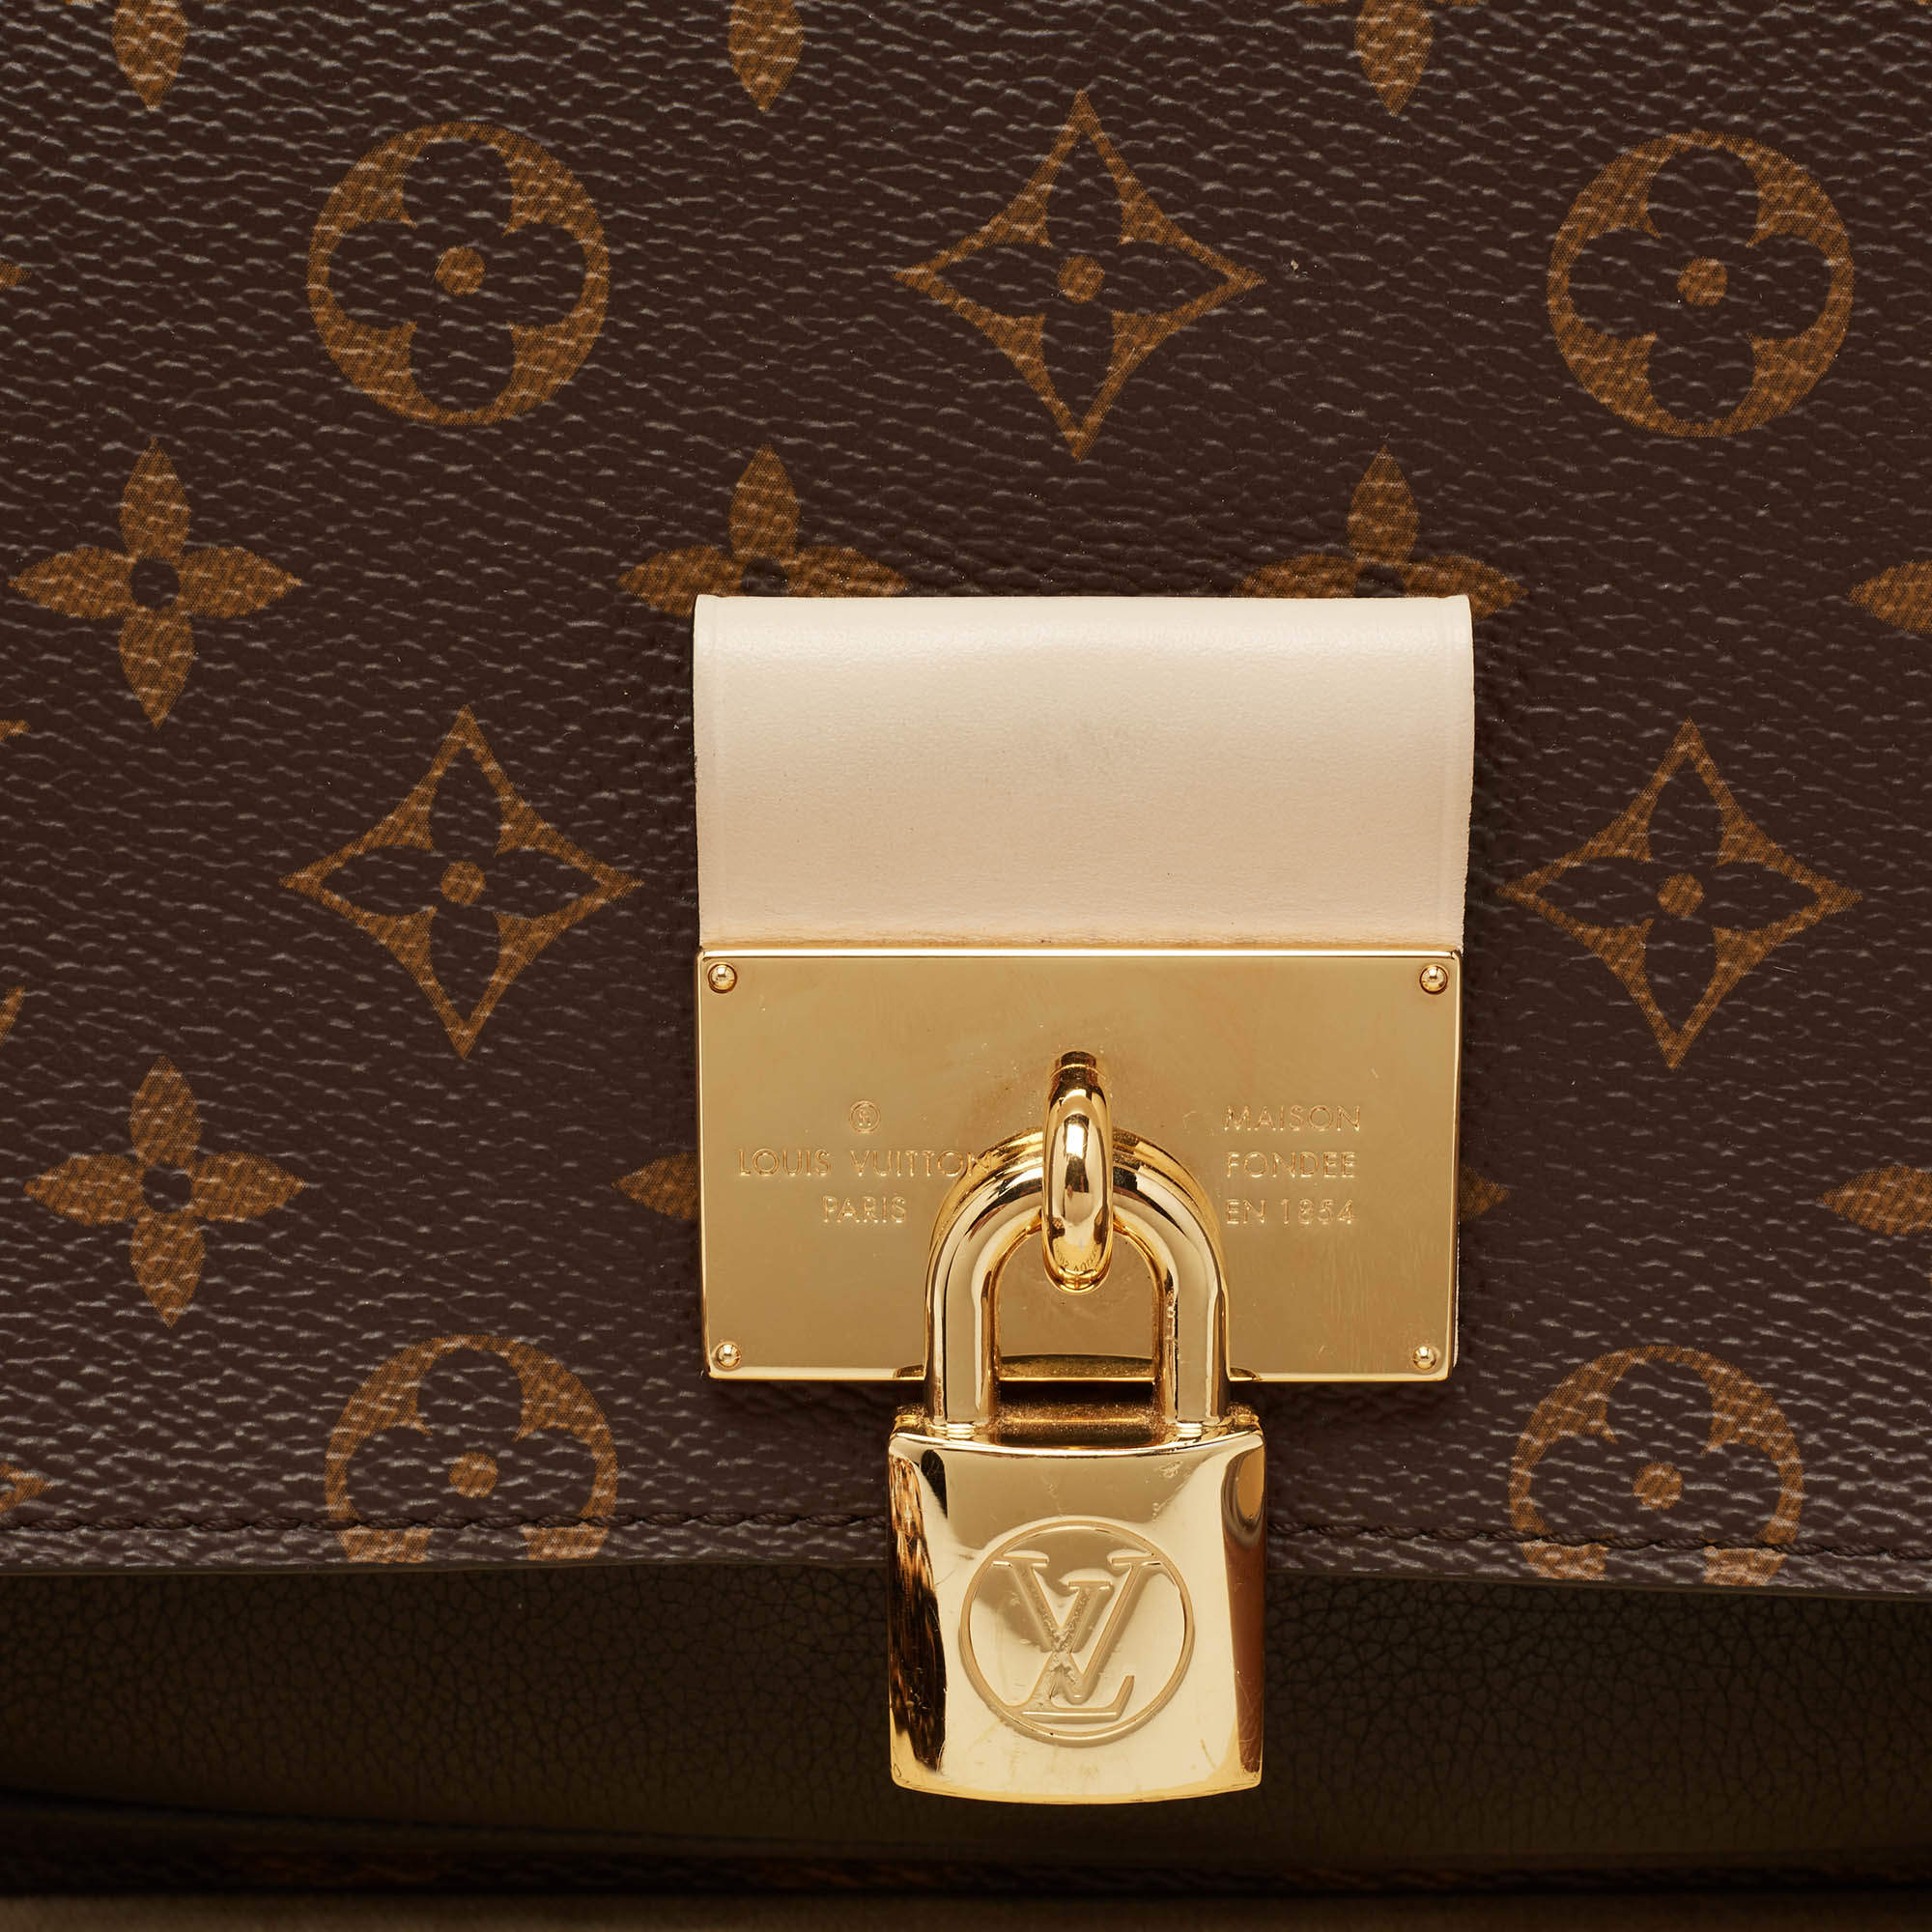 Vaugirard leather handbag Louis Vuitton Brown in Leather - 25446807